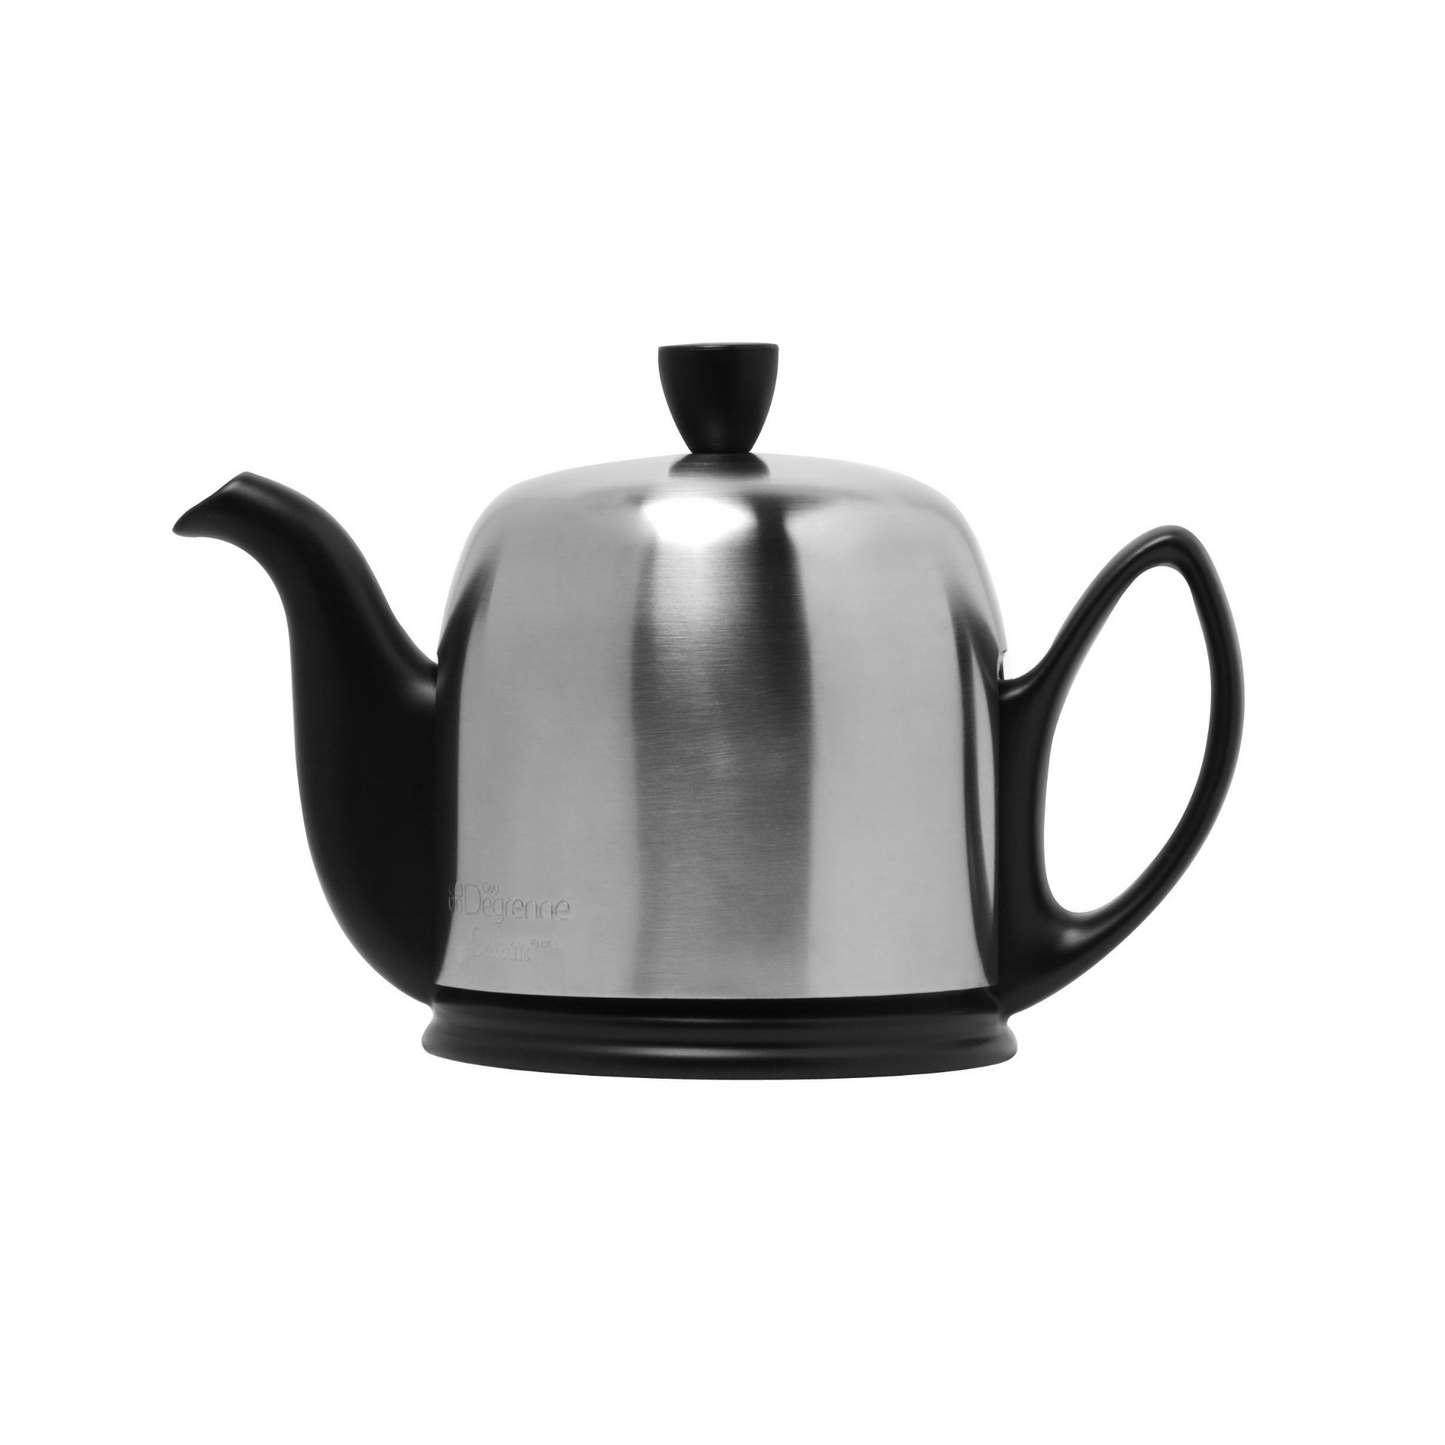 Degrenne Canada Salam Black Teapot 4-cup Clementine Boutique